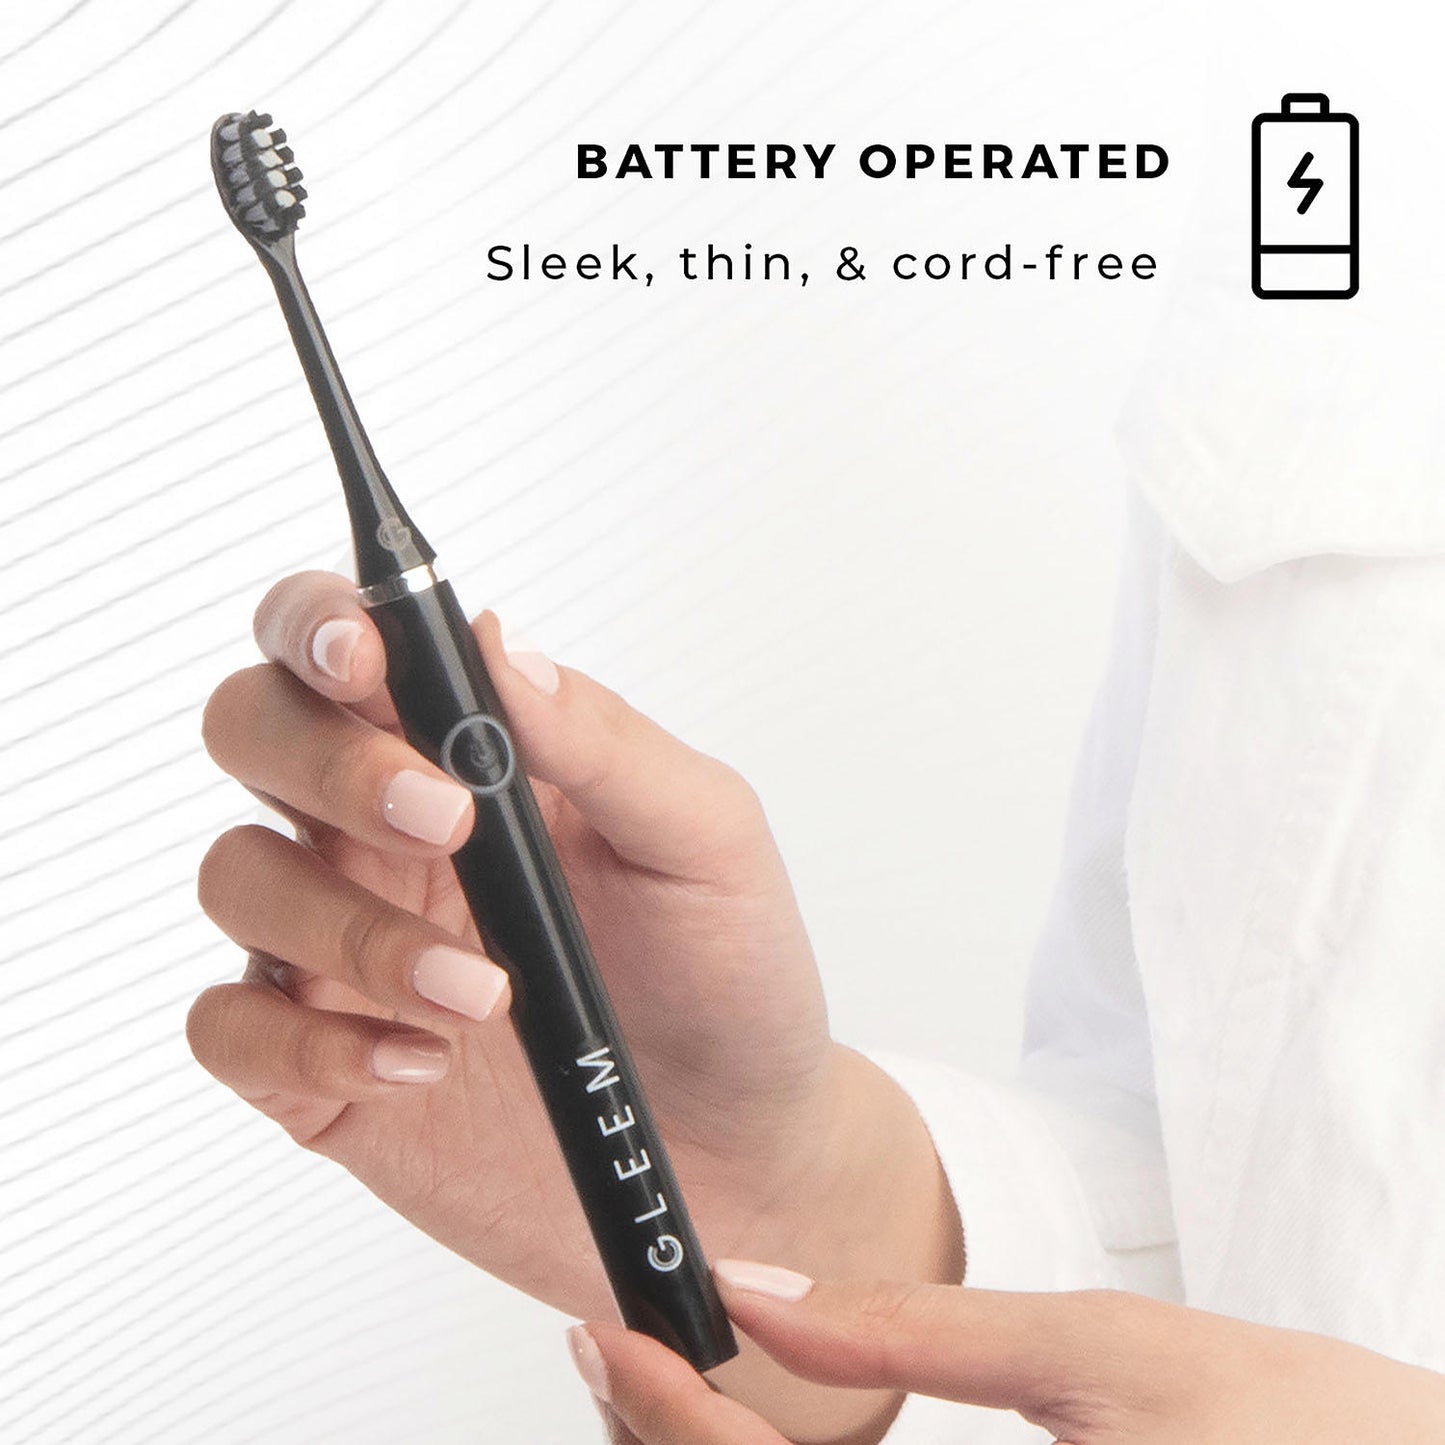 Gleem Electric Toothbrush, Battery Powered, Soft Bristles, Black and White (2 pk.)